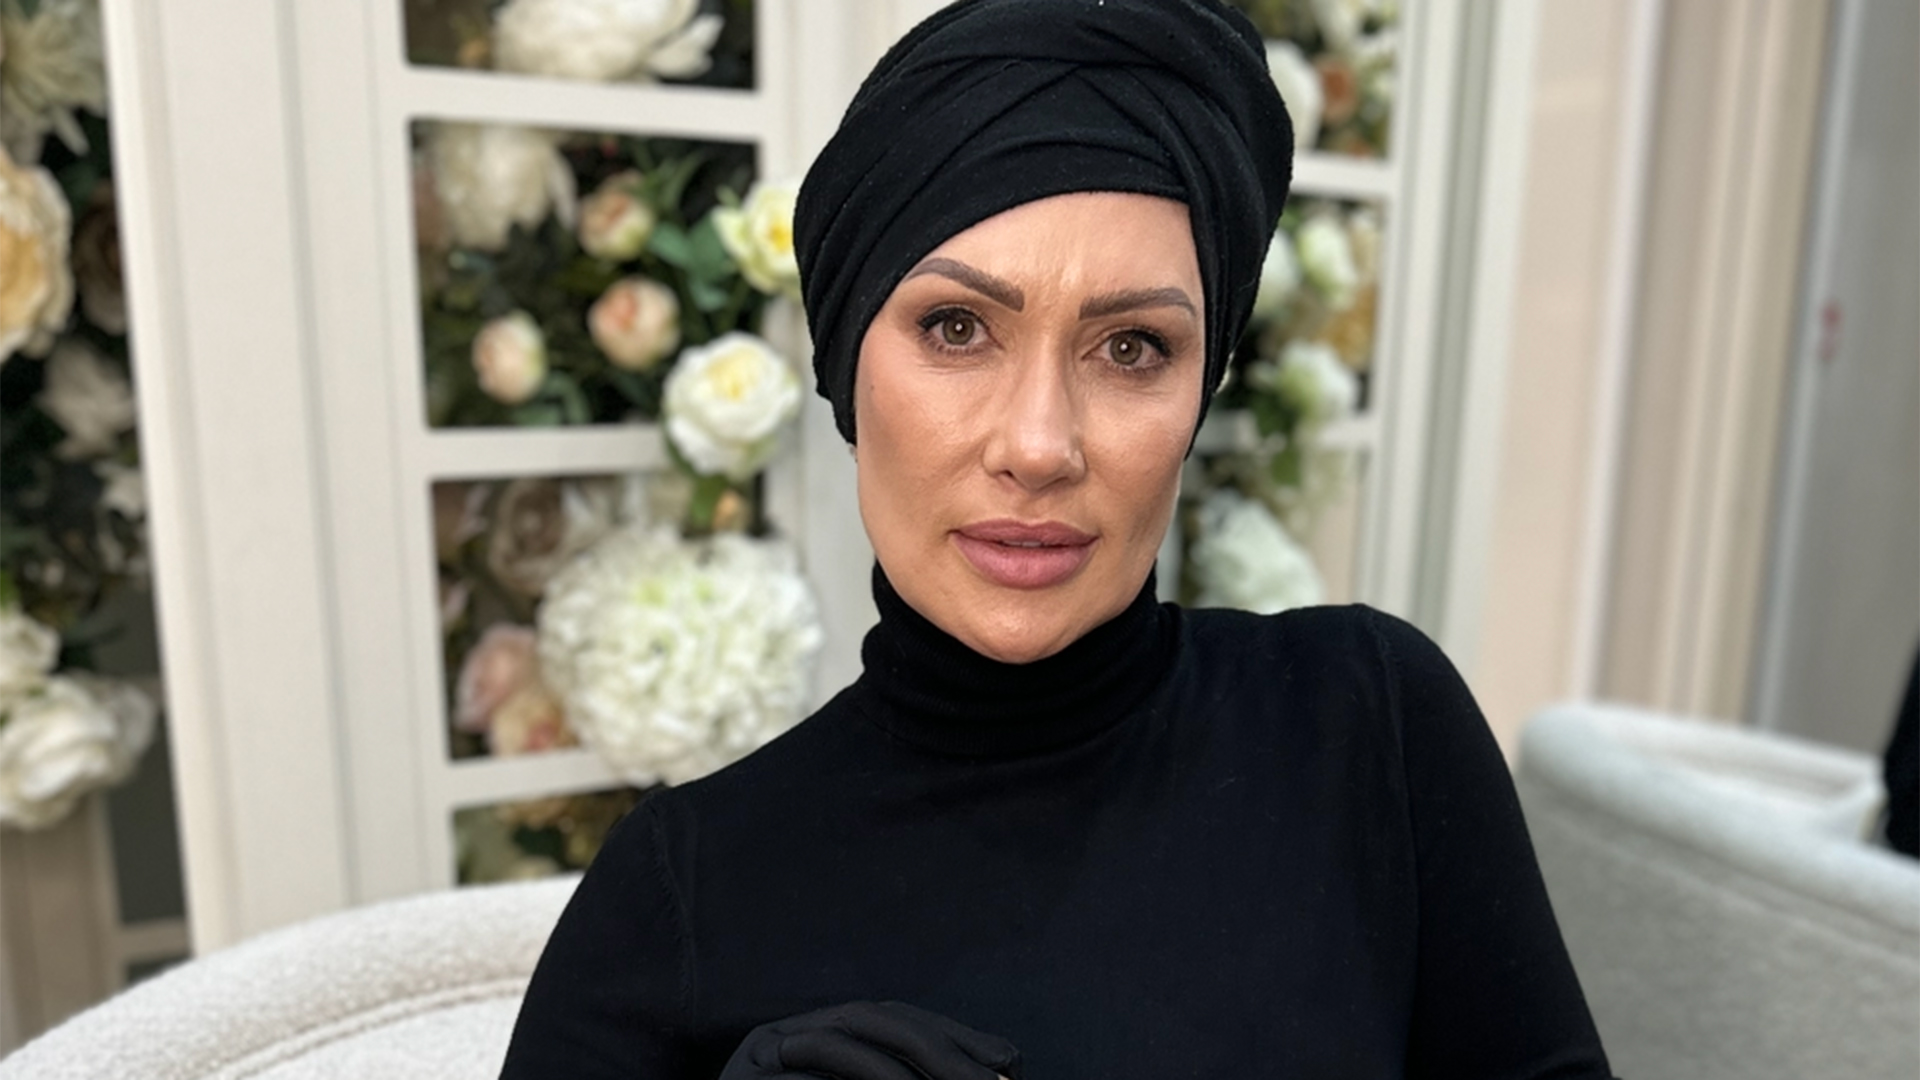 A woman in a black turban